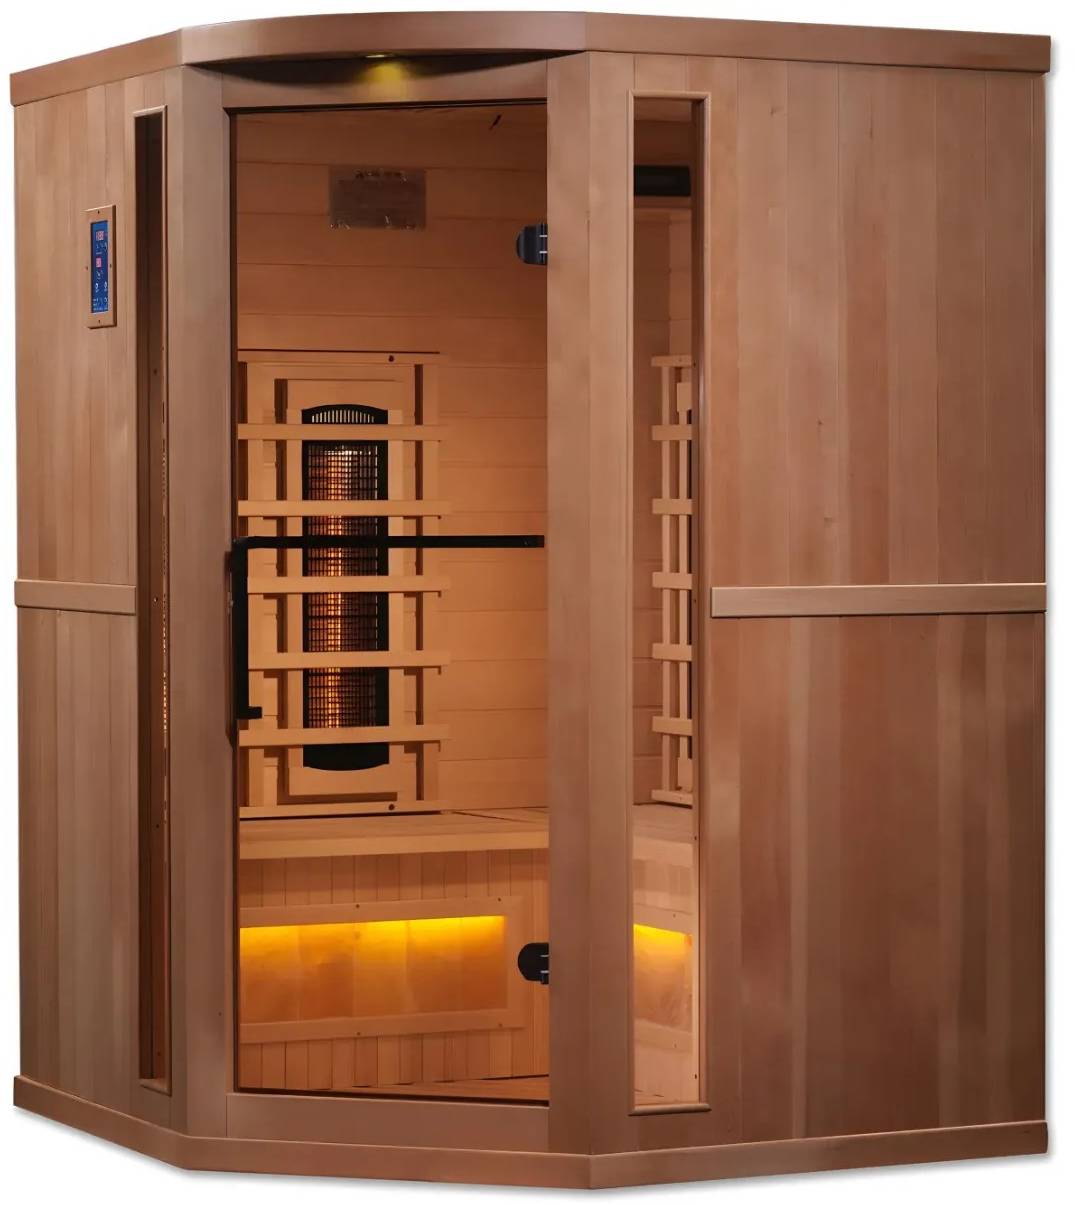 ZiahCare's Golden Designs 3 Person Full Spectrum Infrared Corner Sauna Reserve Edition Mockup Image 4